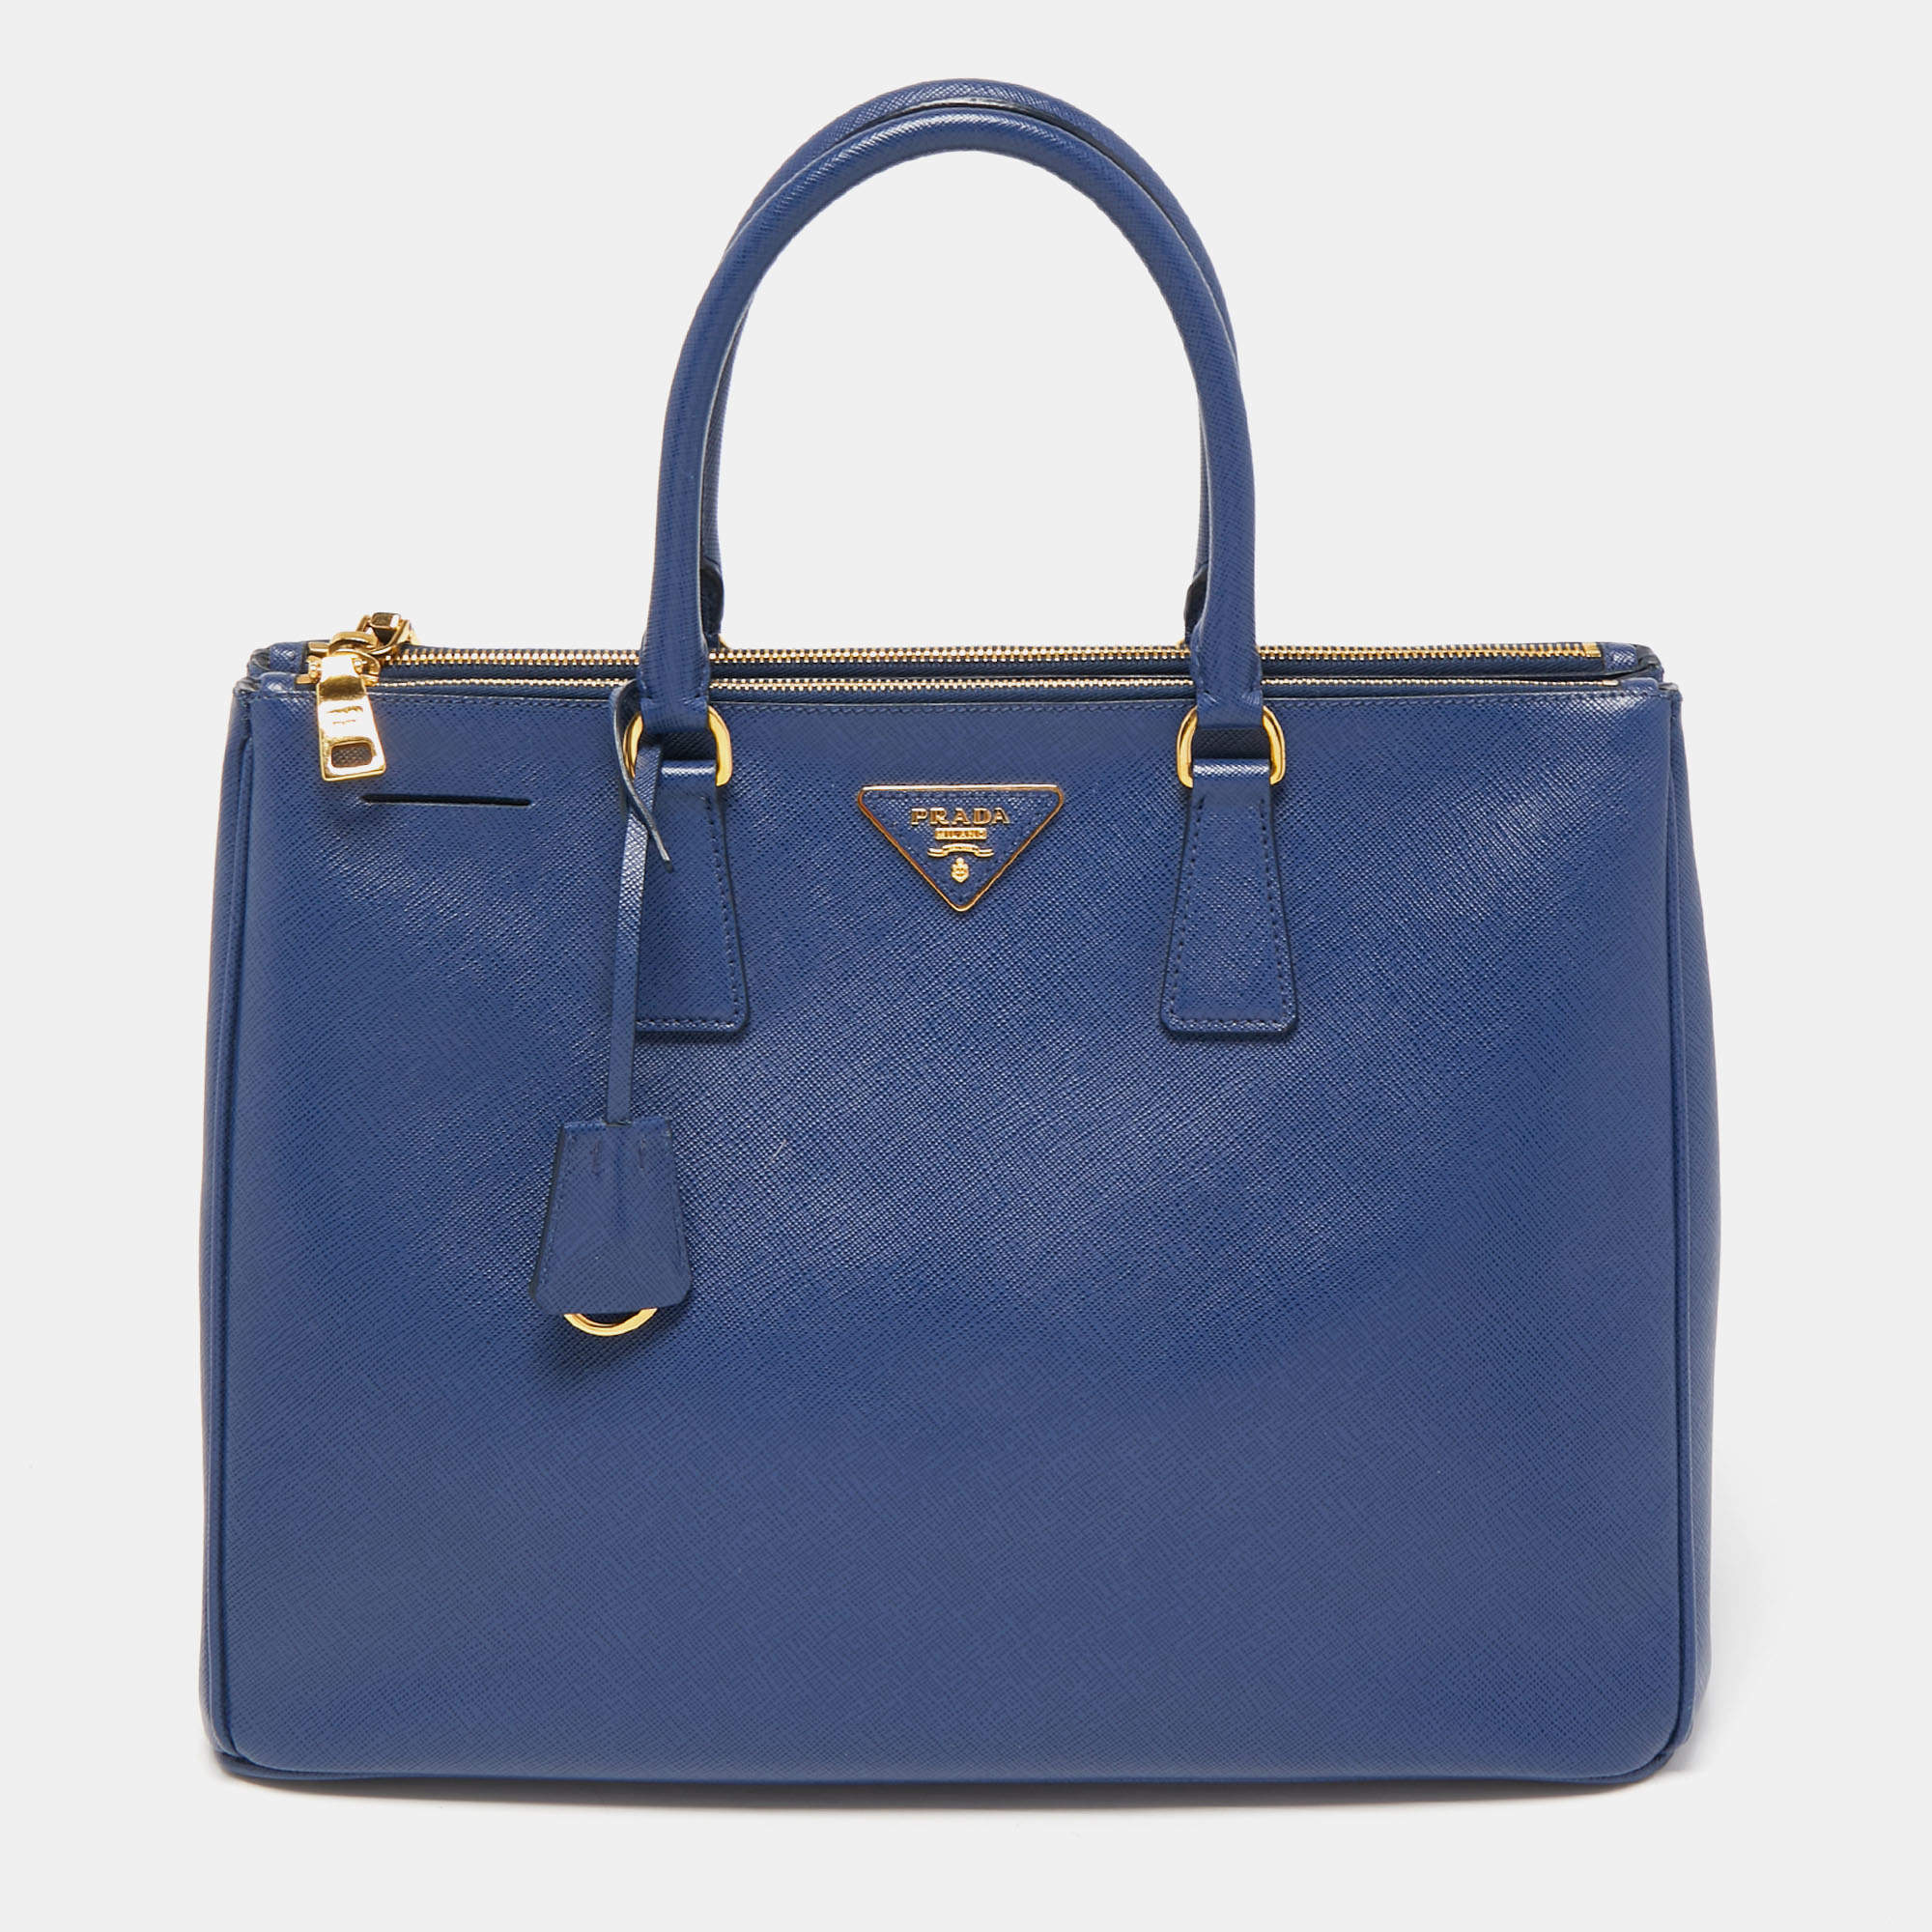 Prada - Women's Saffiano Leather Handbag Tote - Blue - Synthetic